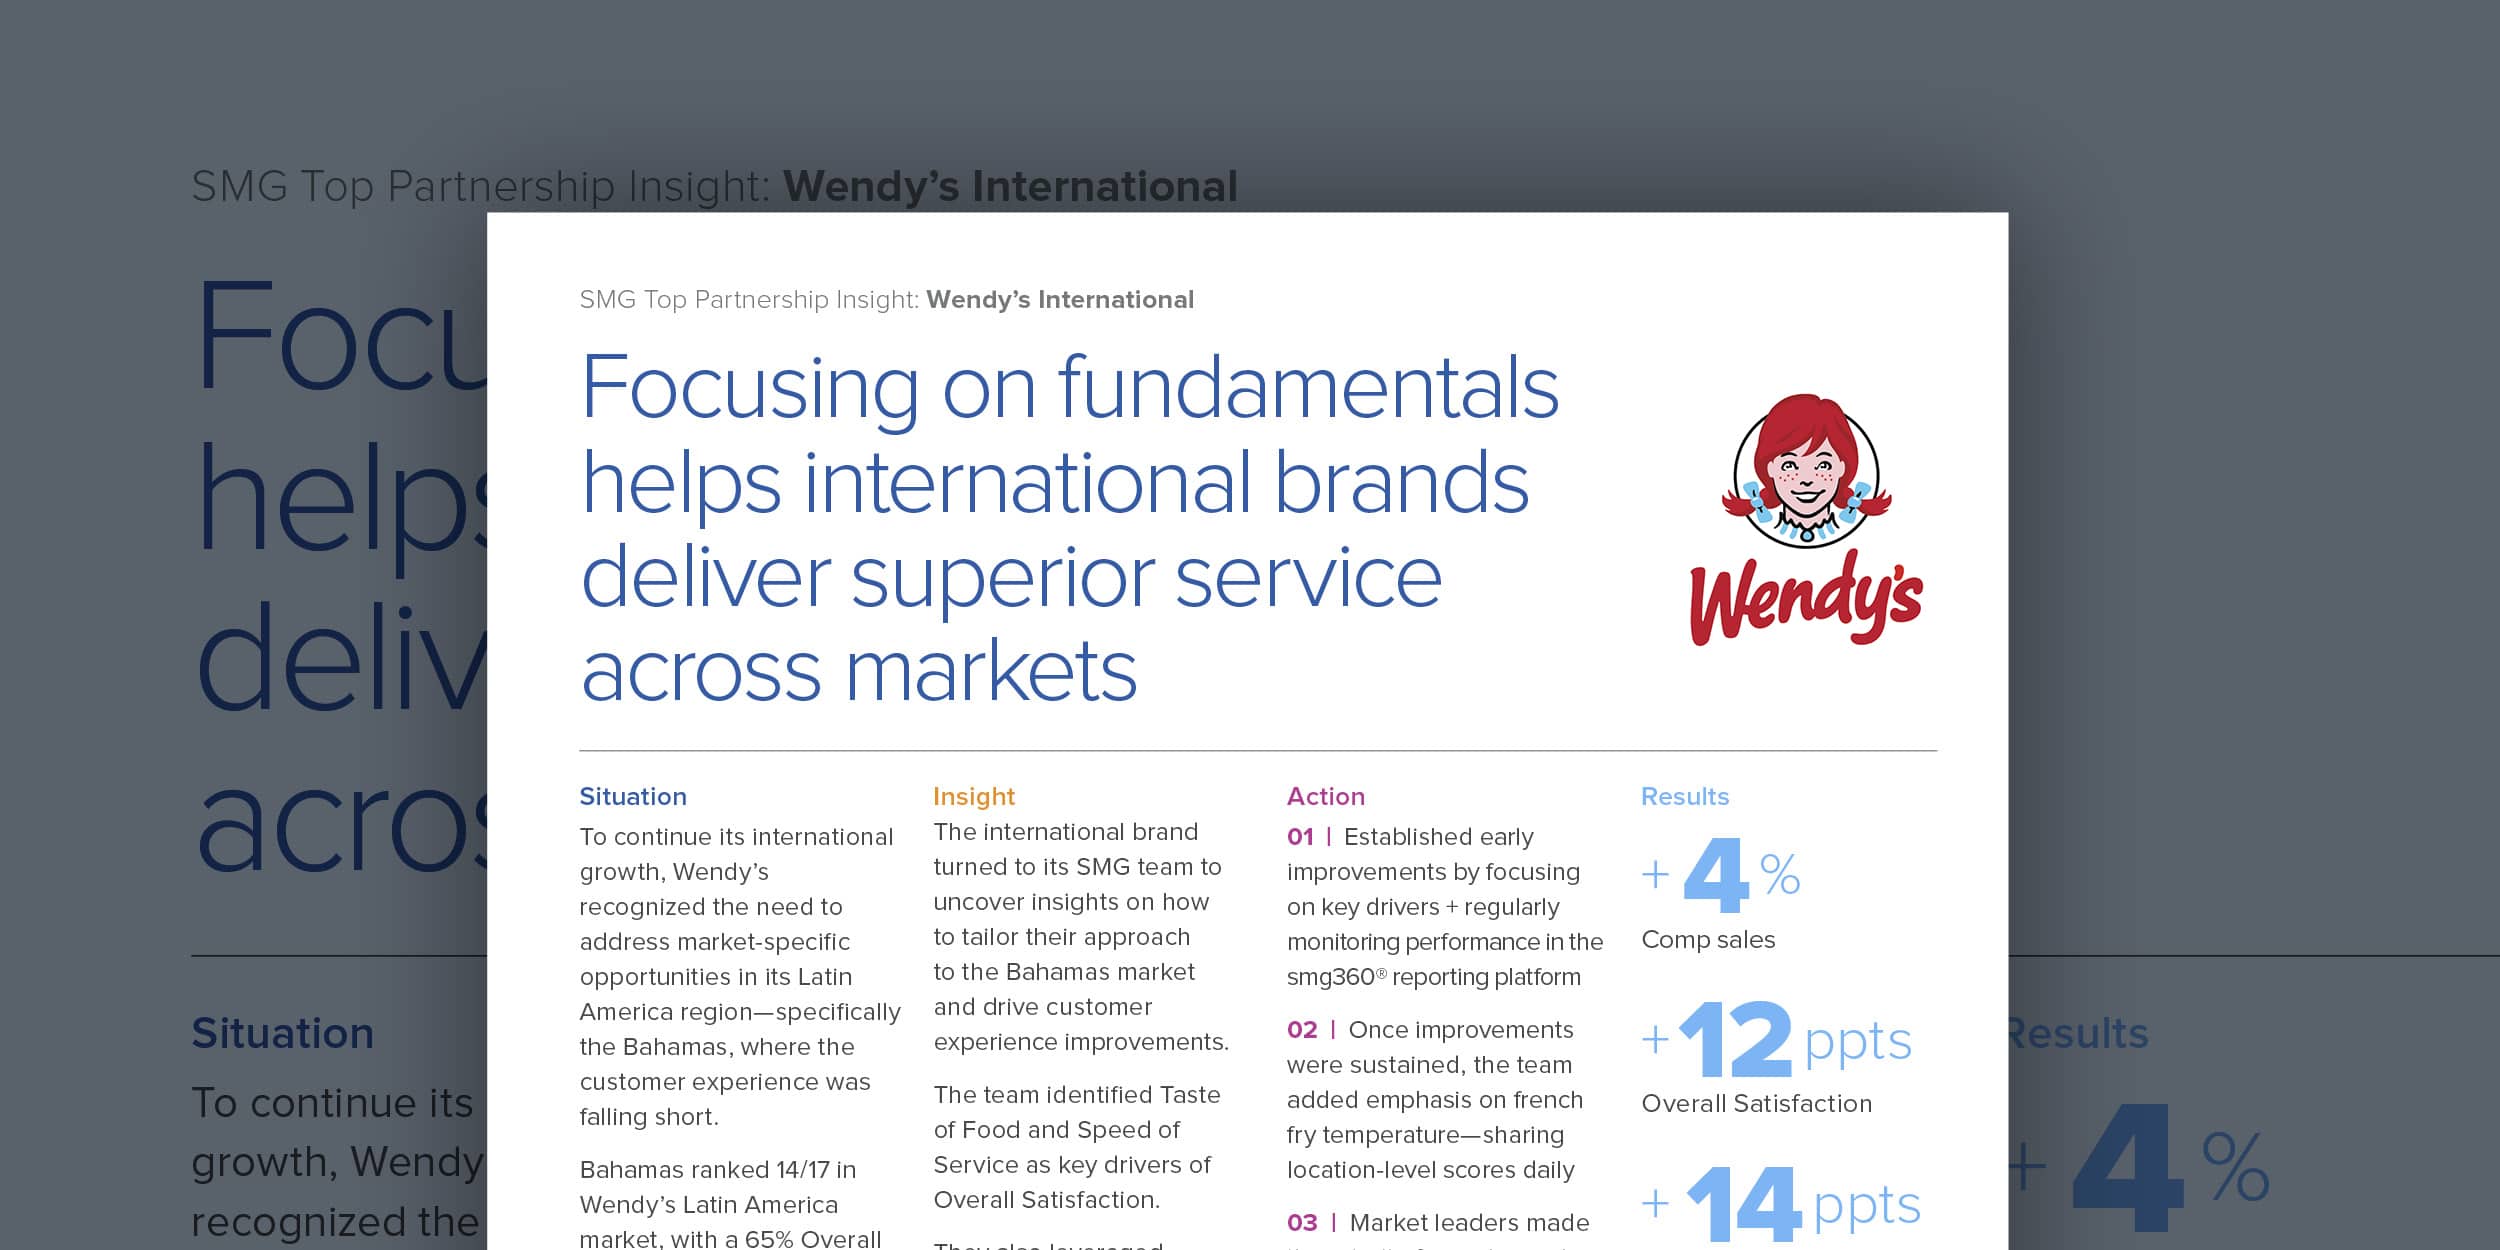 Focusing on fundamentals helps international brands deliver superior service across markets